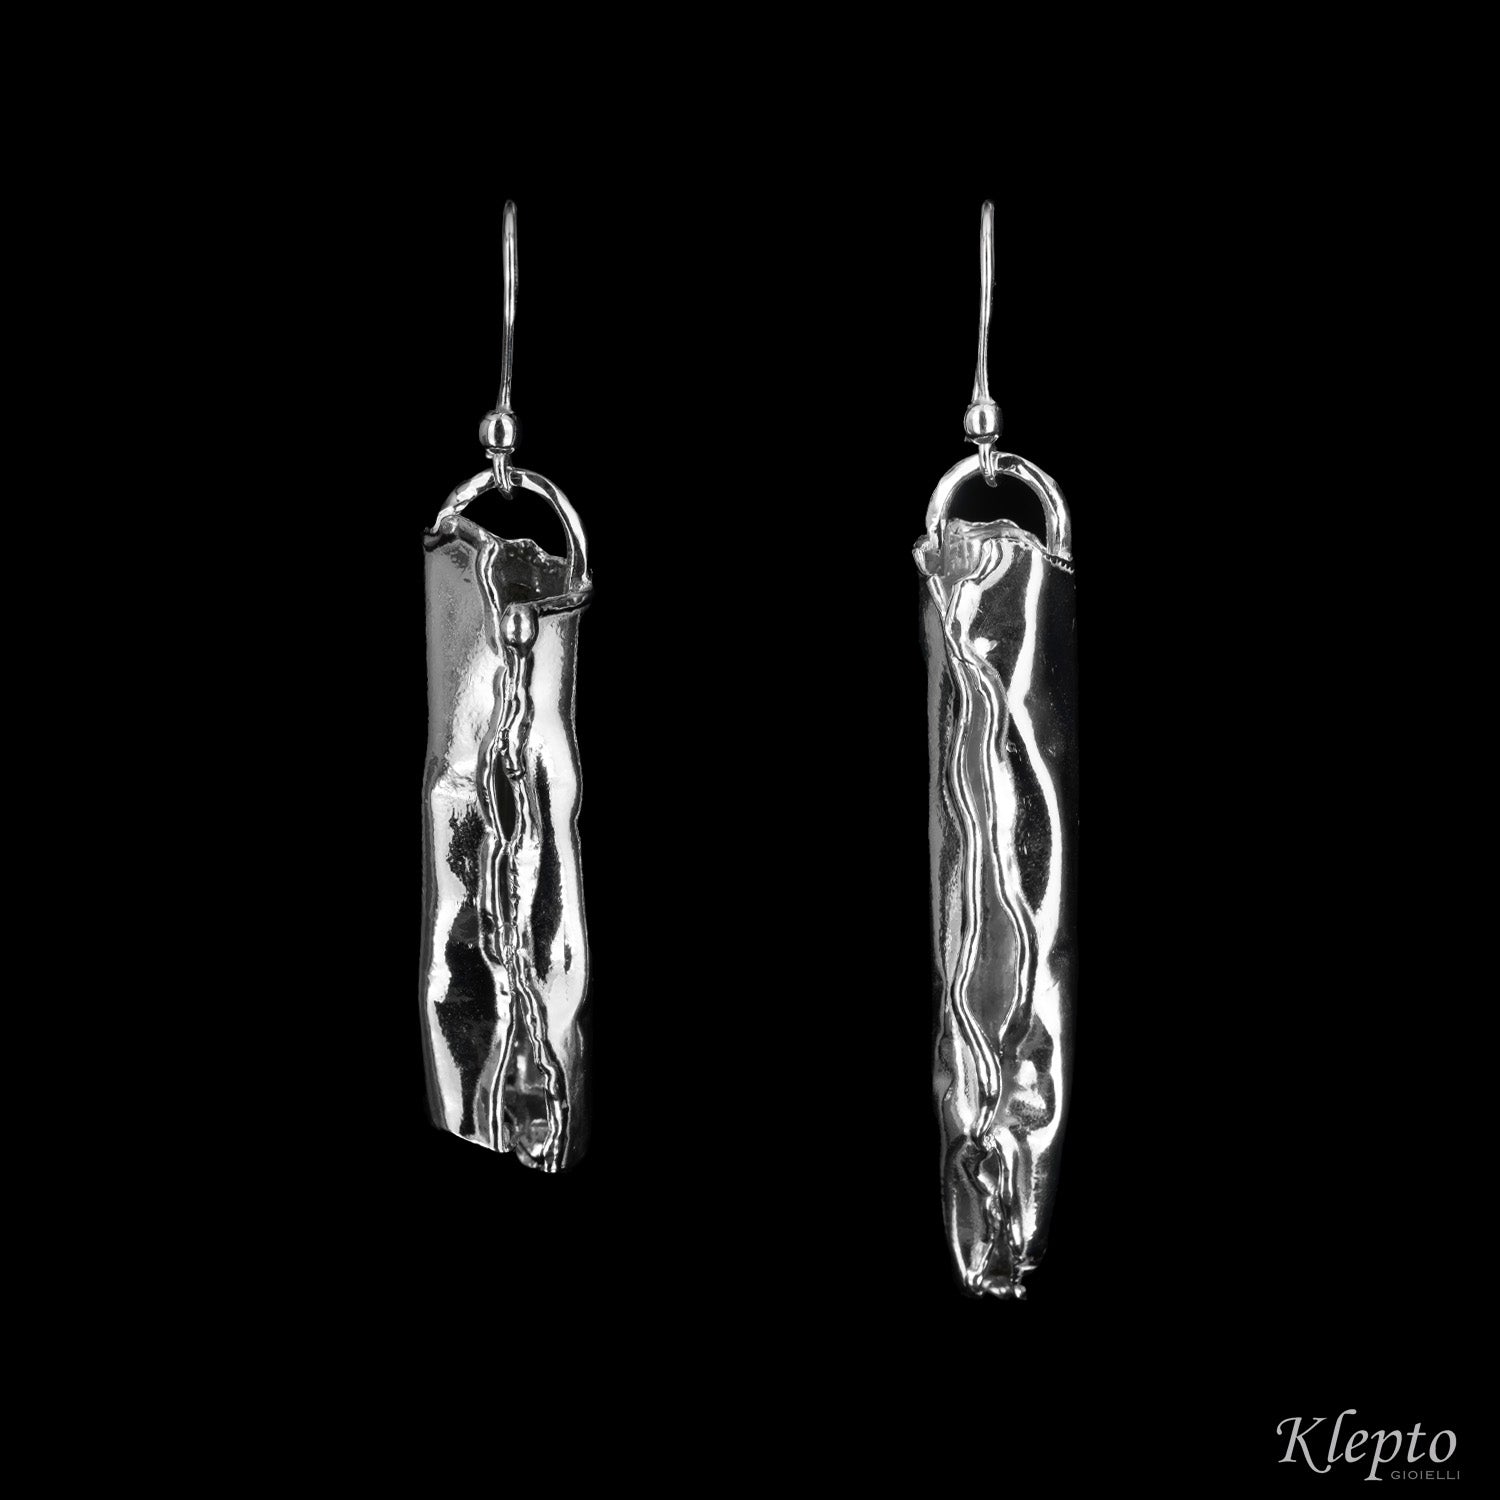 Silnova® Silver earrings with flame-fused hooks